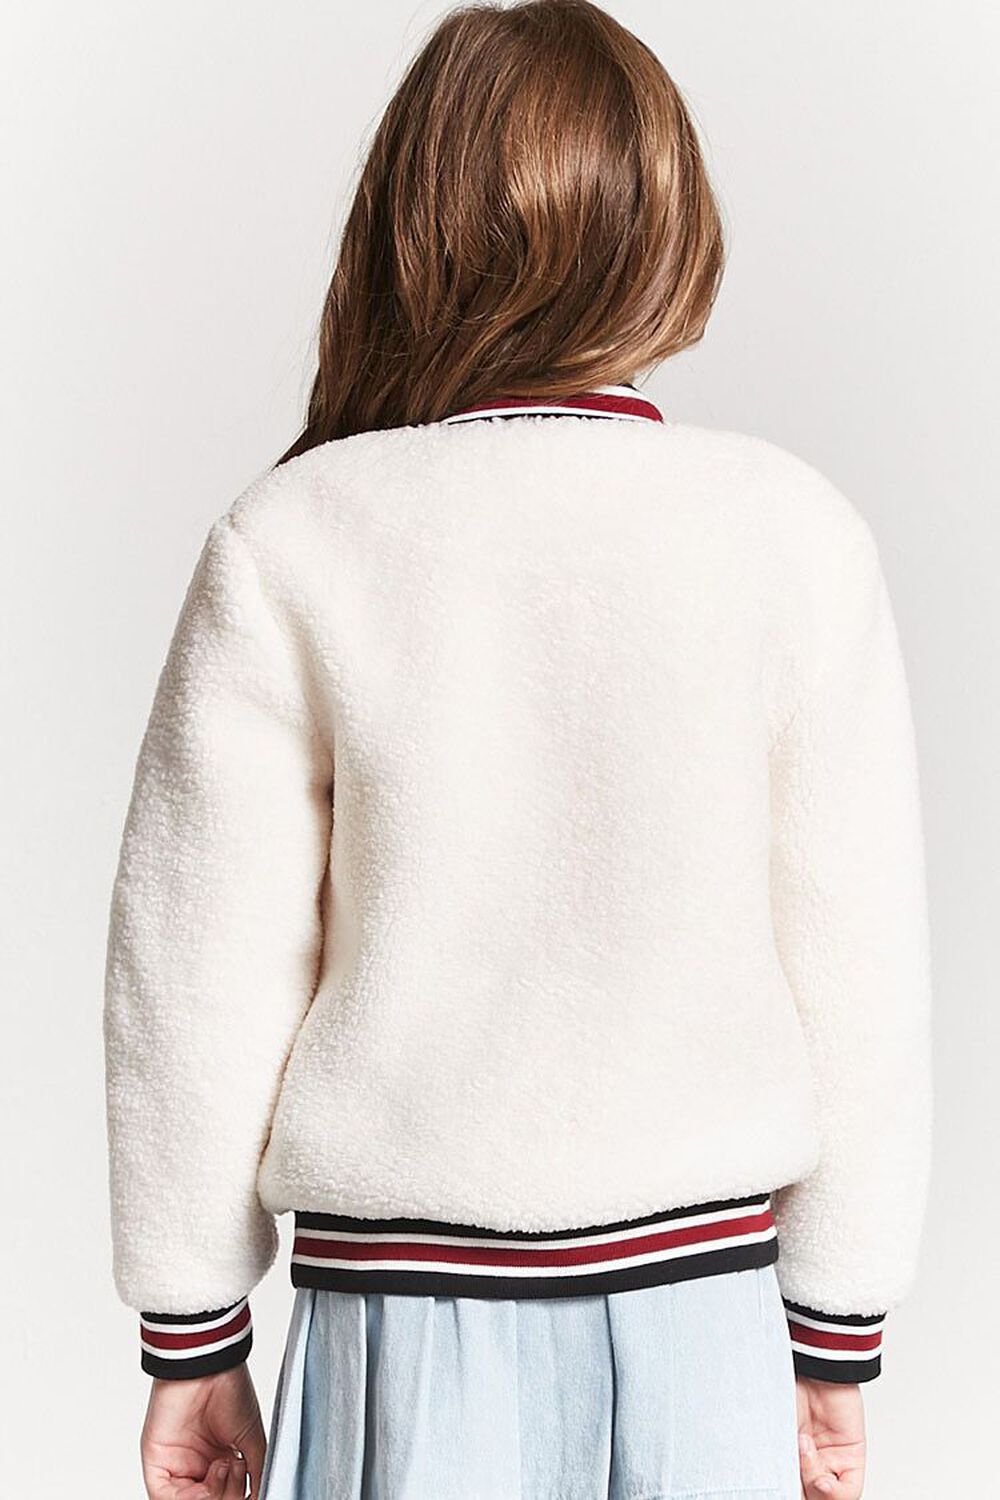 Chanel 21-22FW Varsity Sweater Jacket - Ivory Pink CC / Racer Trim - 34 US 2